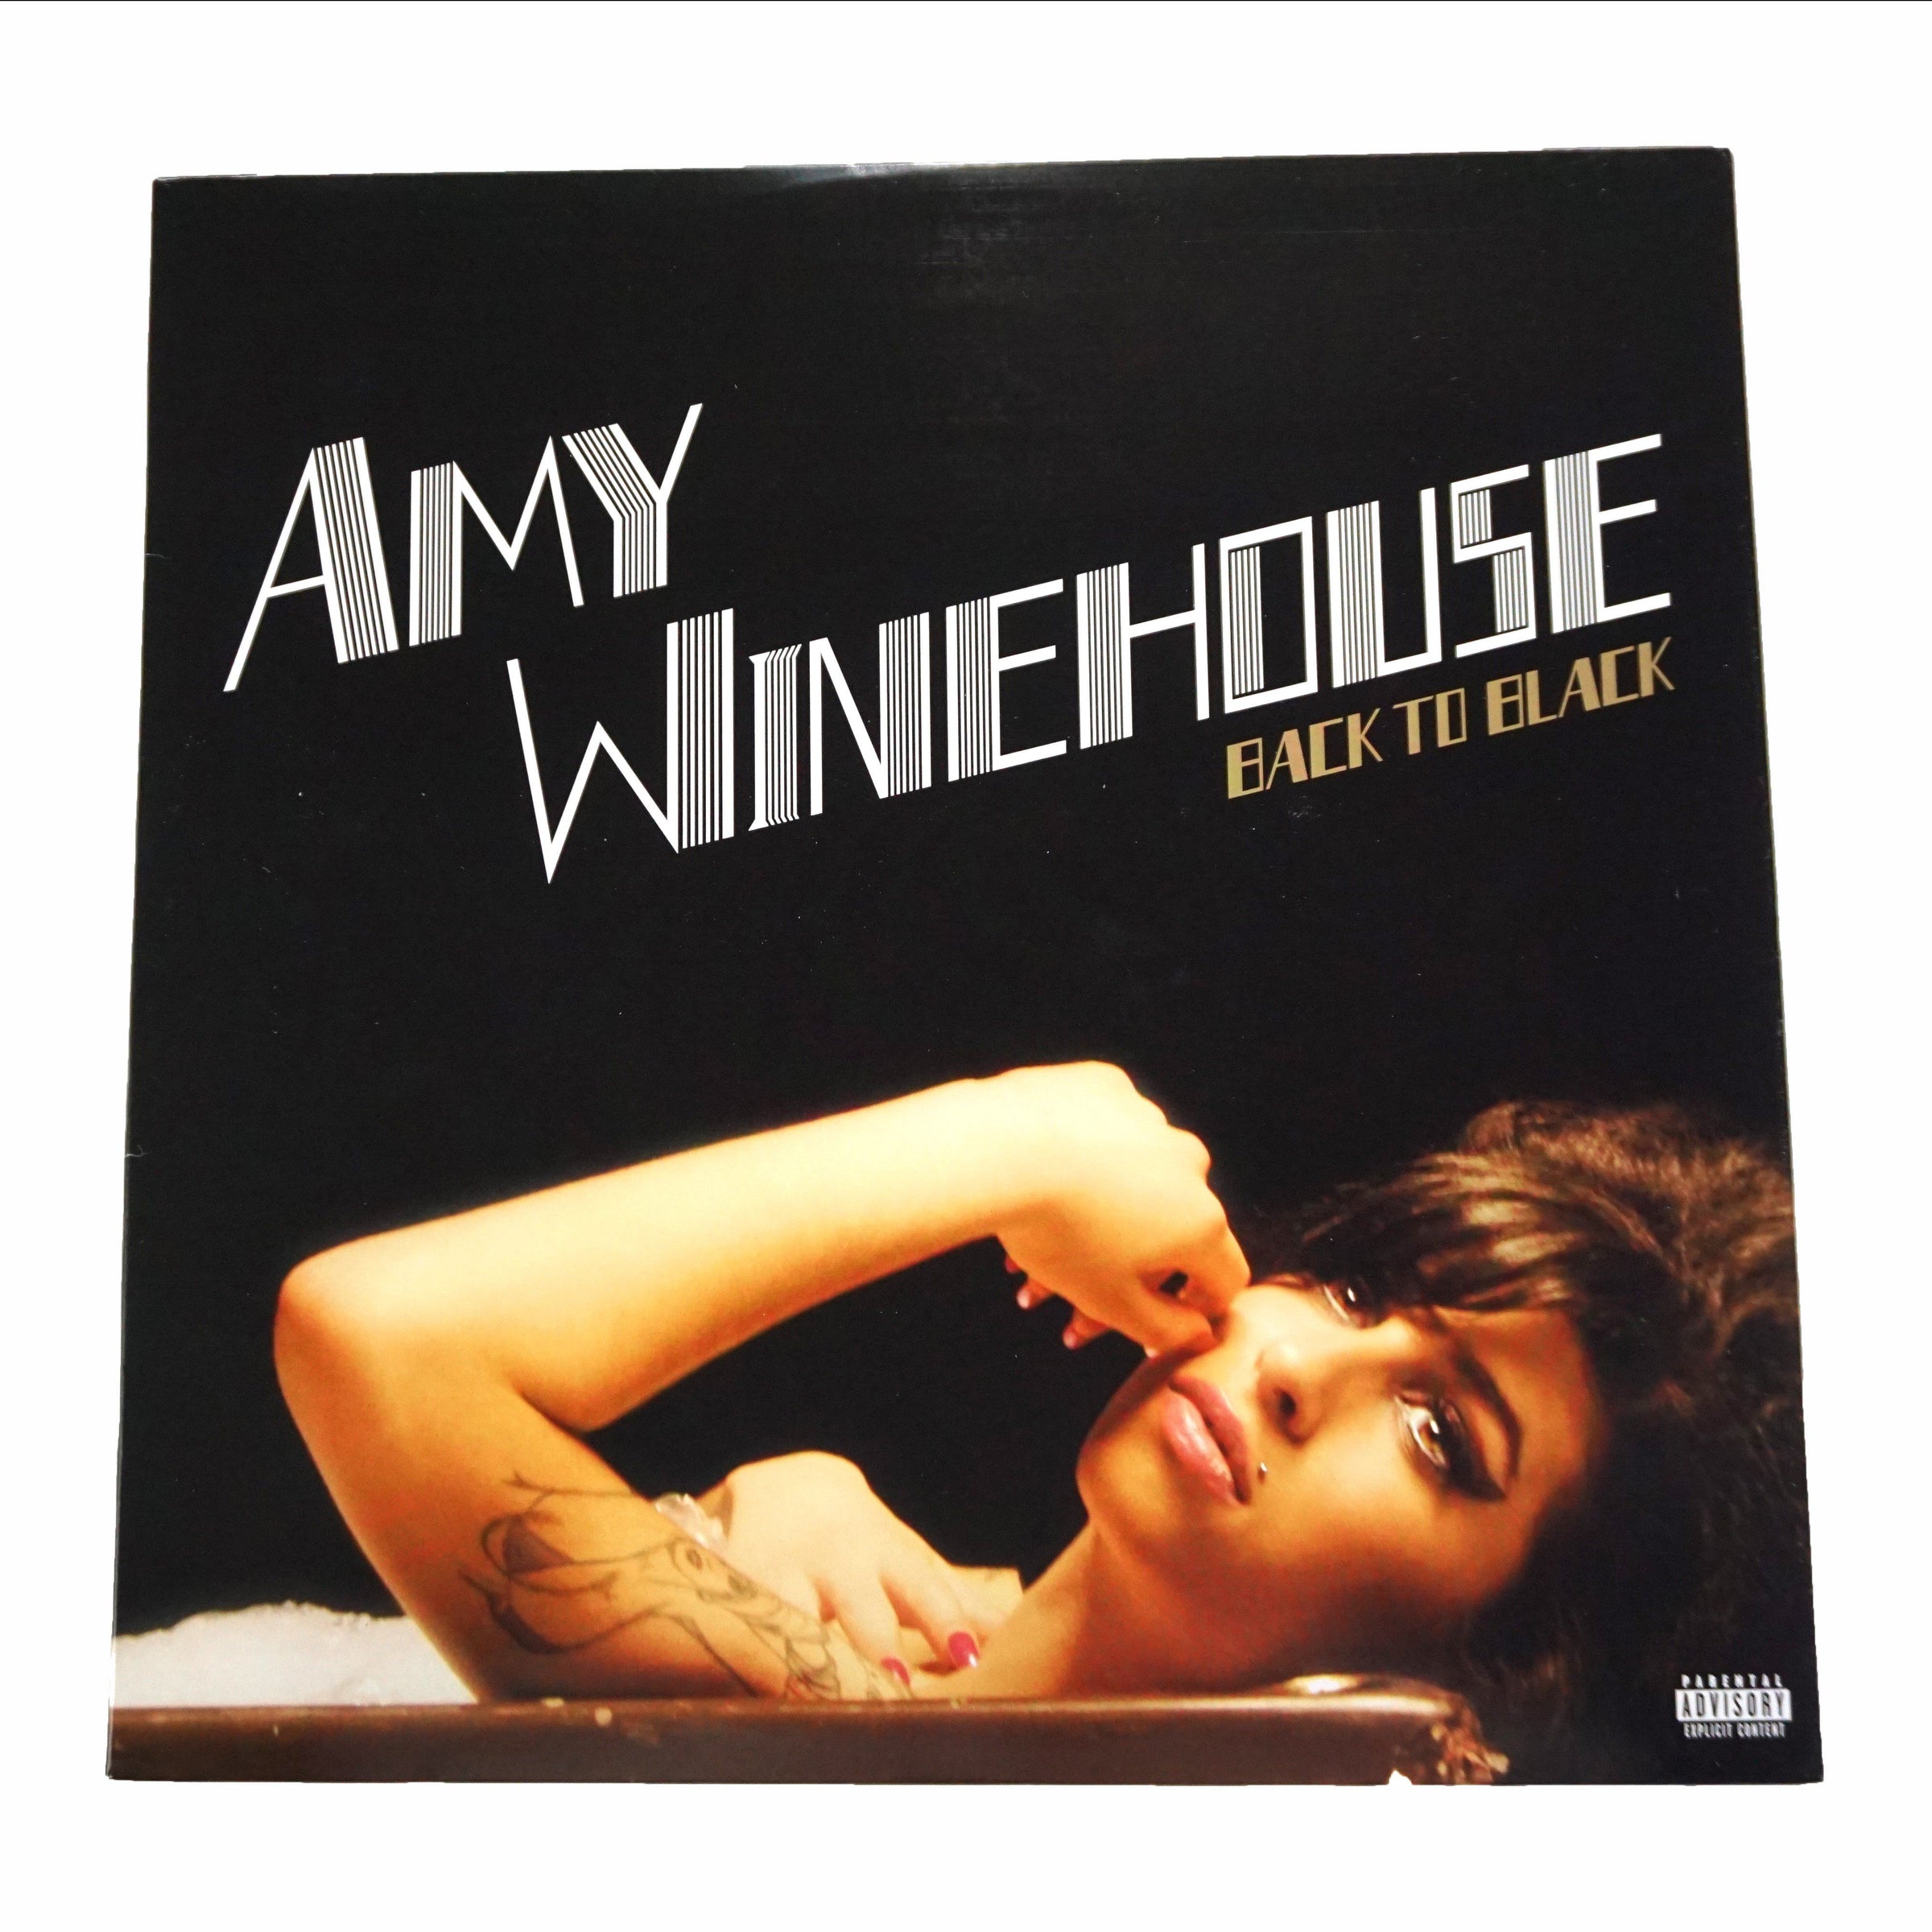 Amy Winehouse Vinyl  Back To Black - Vinyl